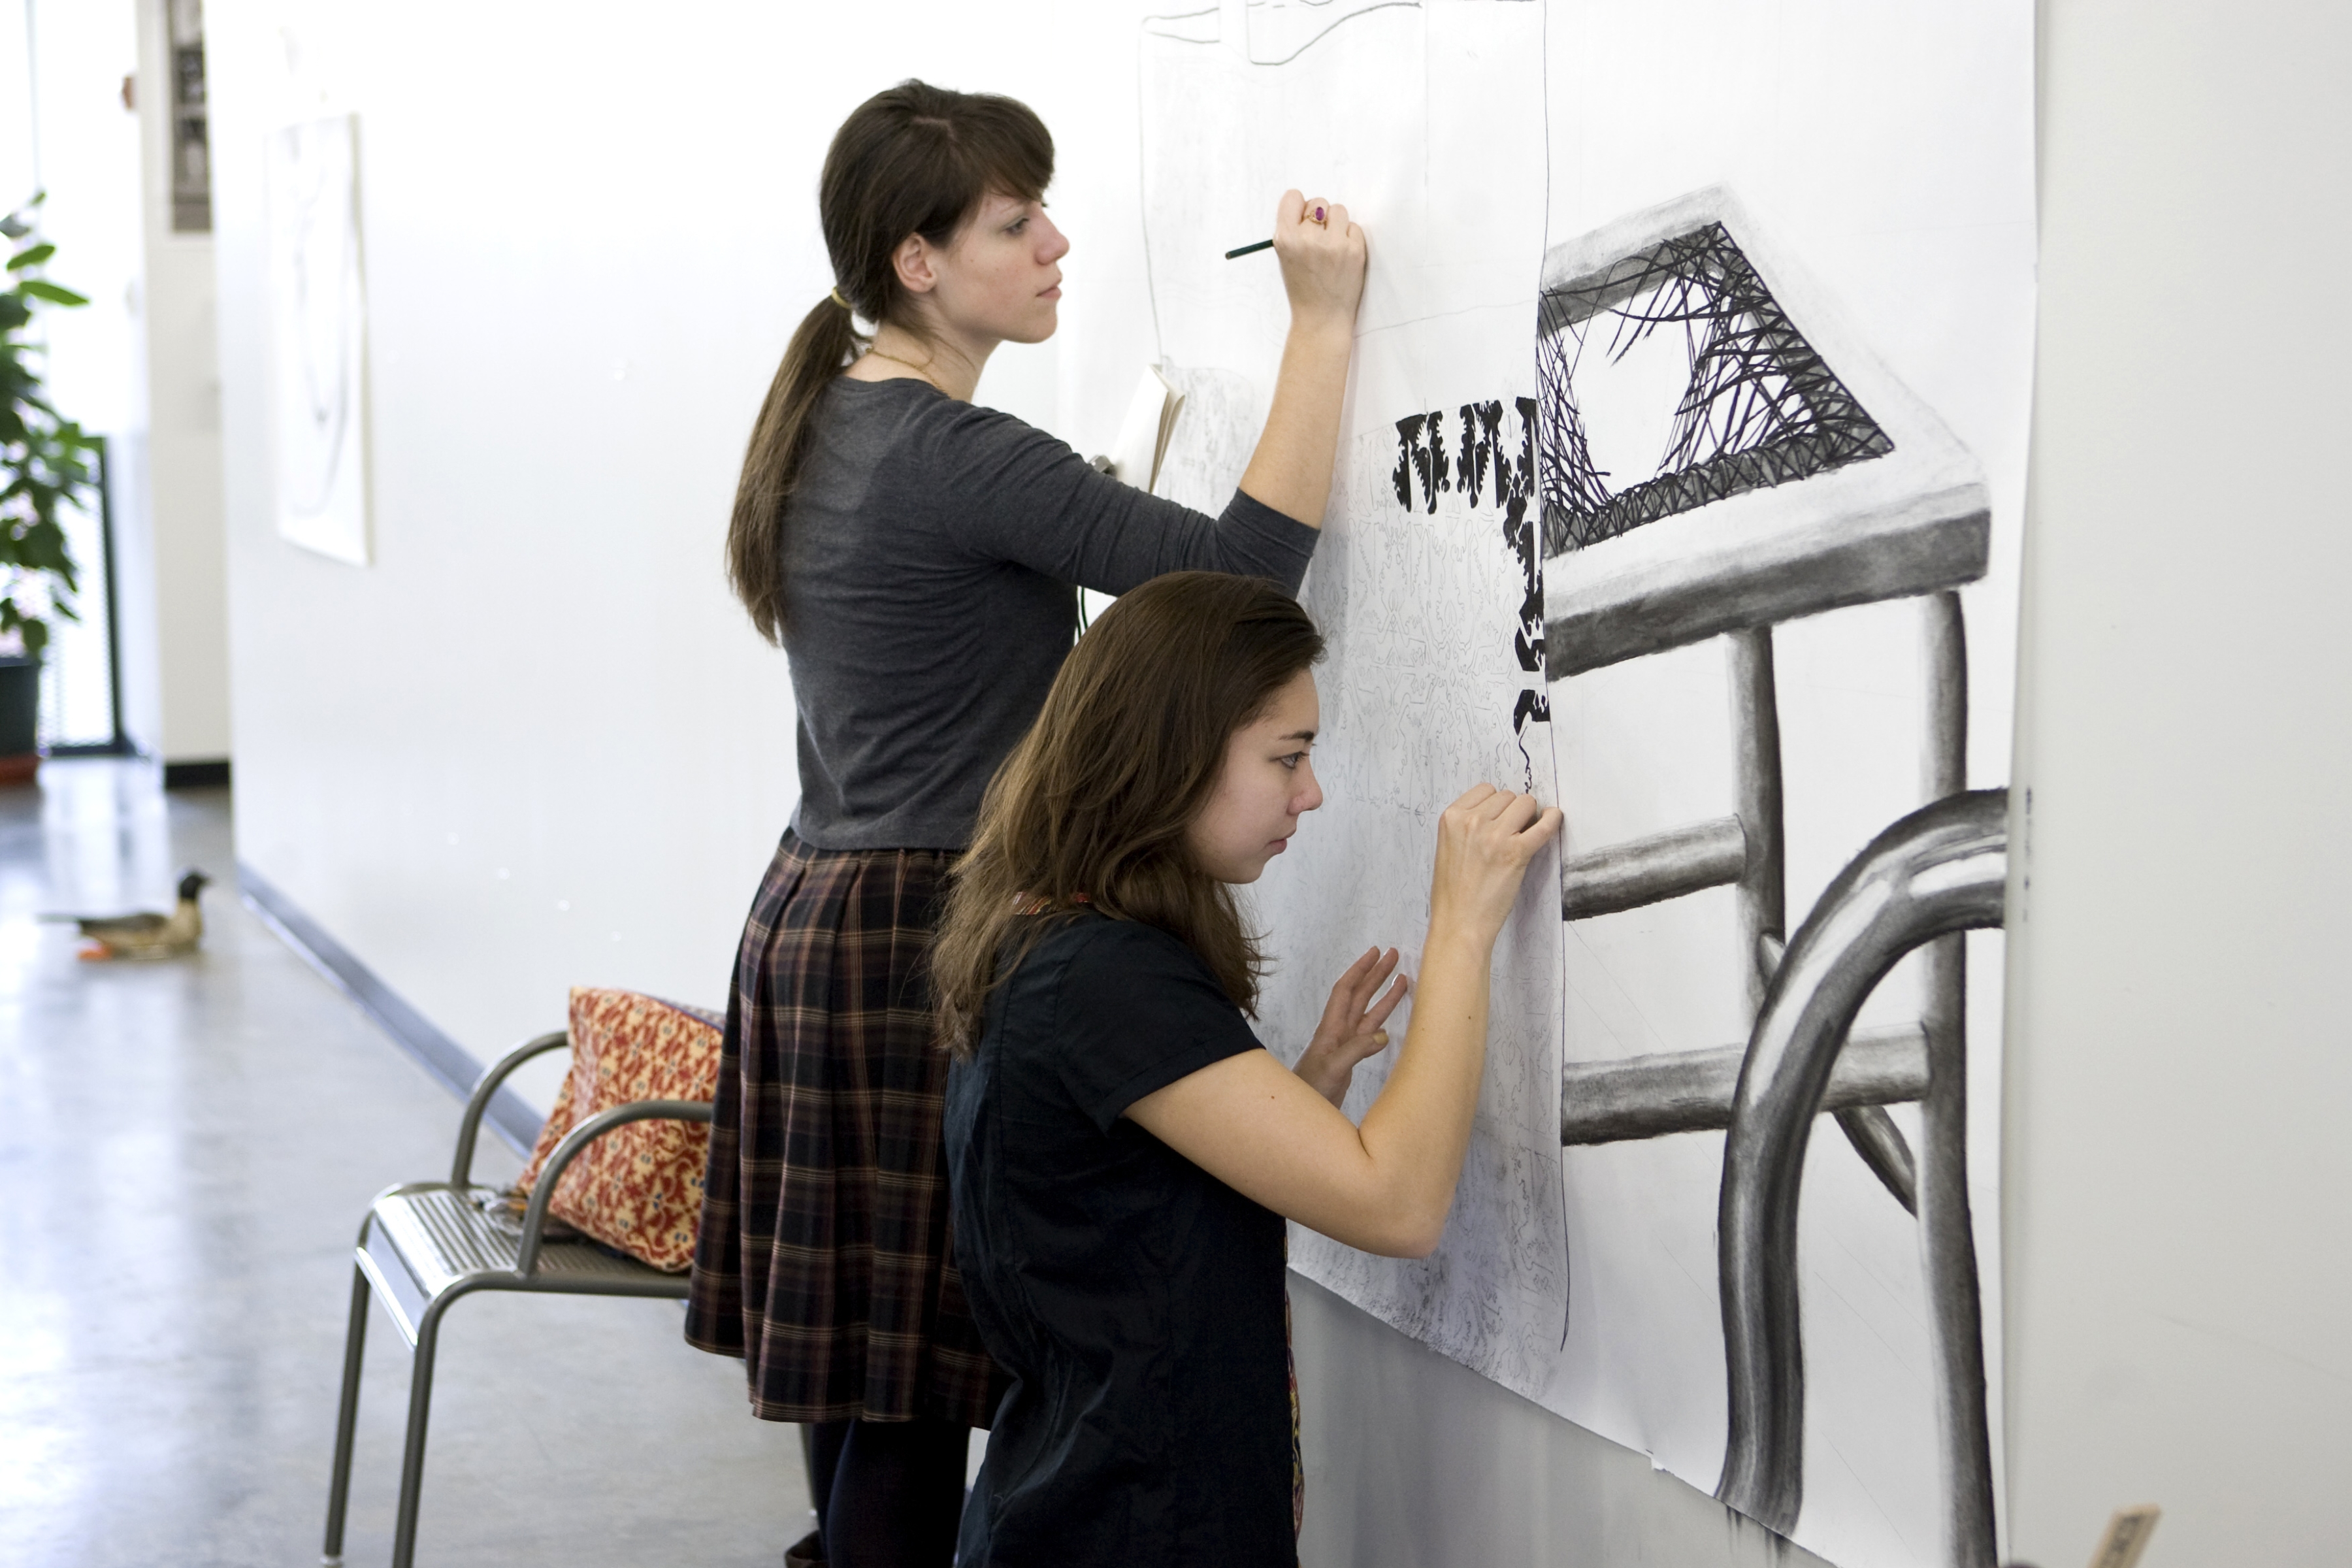 Two women sketching a mural